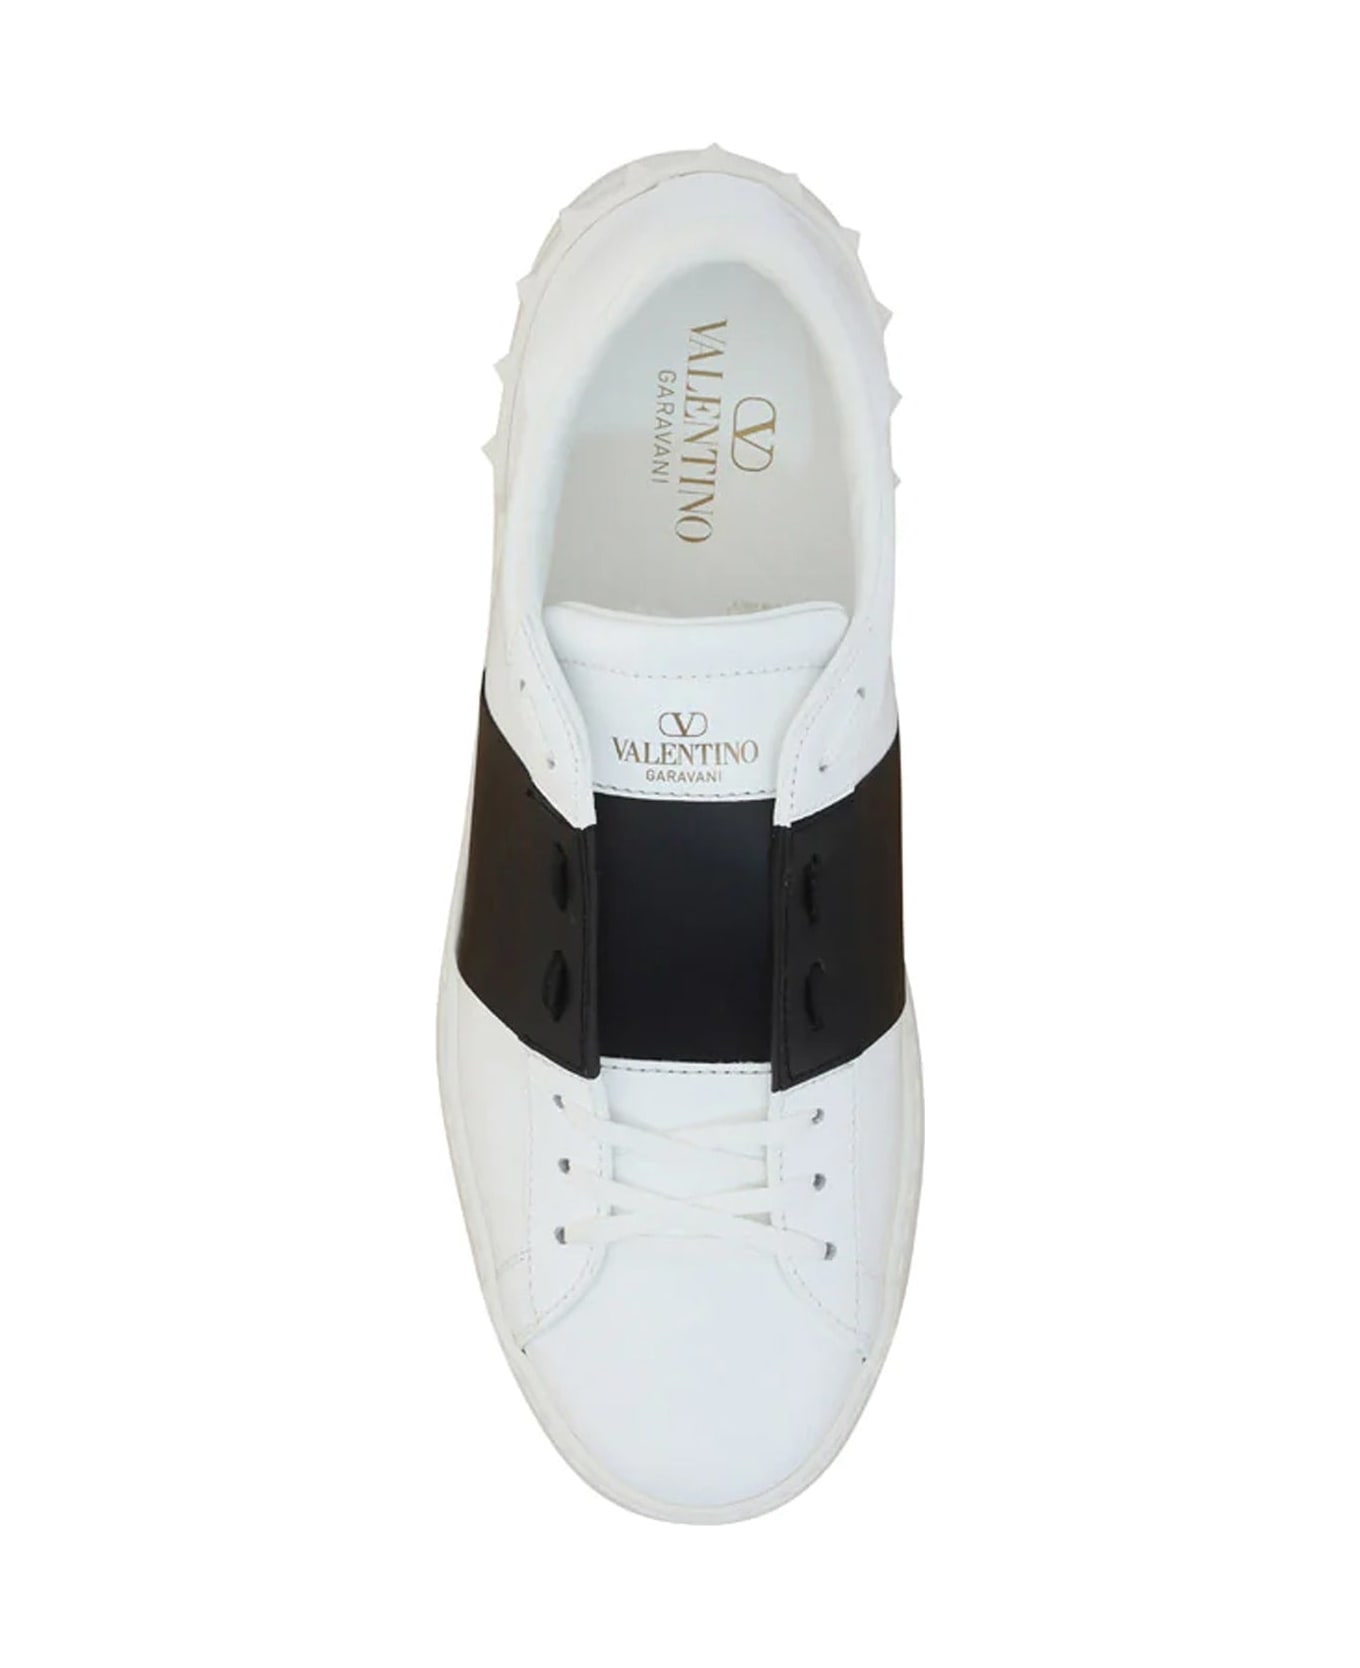 Valentino Garavani Garavani Open Leather Sneakers - White スニーカー